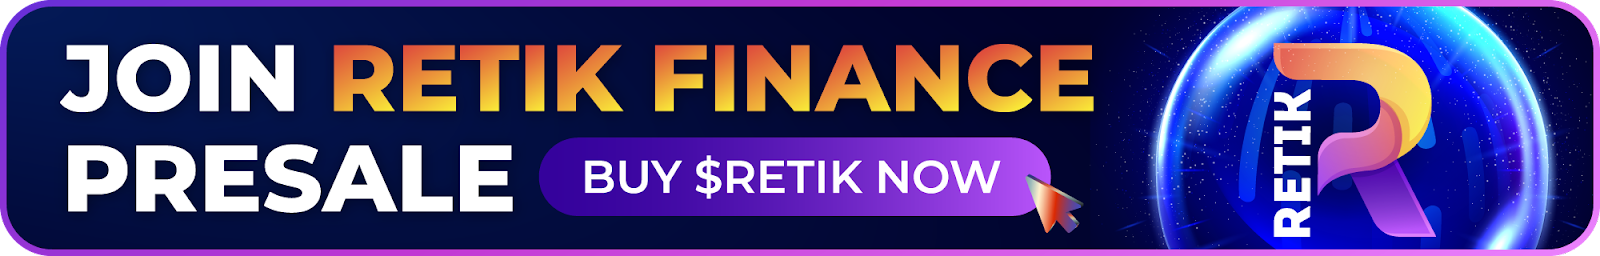 Convierte $2000 en $500,000 con Retik Finance (RETIK), Shiba Inu (SHIB) y Solana (SOL)